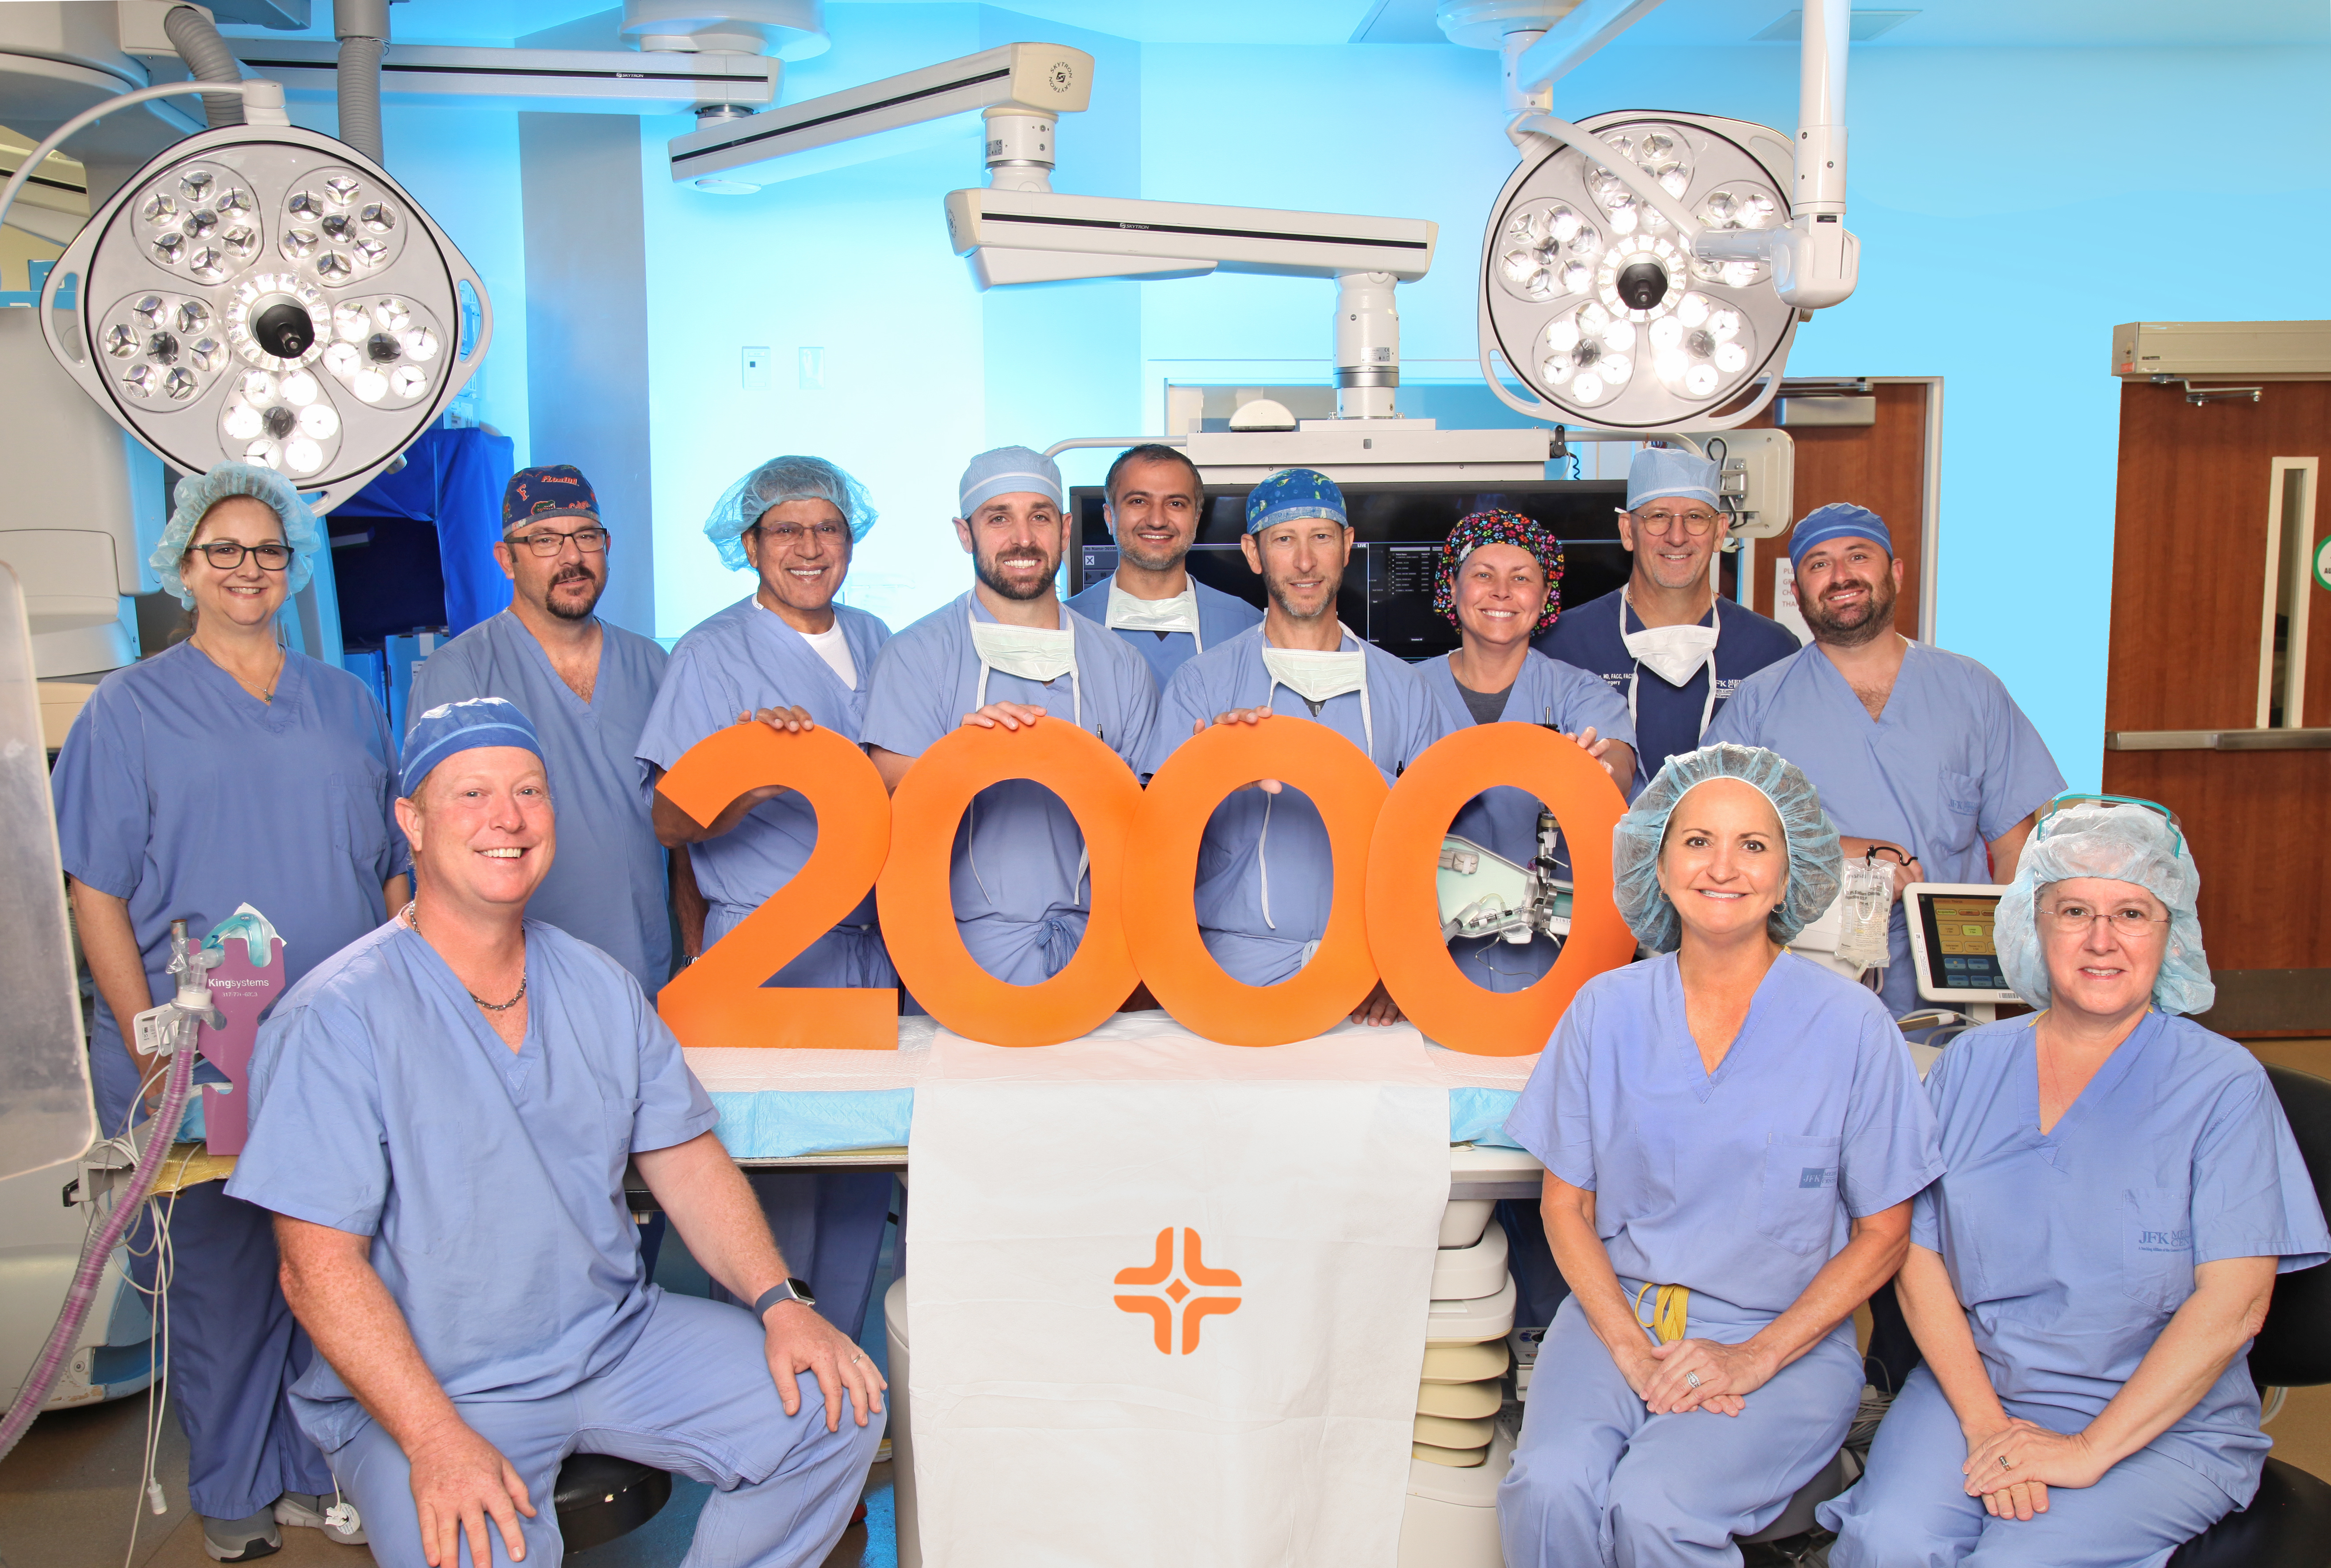 JFK Hospital's TAVR team celebrates 2,000th TAVR procedure, holding "2000" sign in surgery room